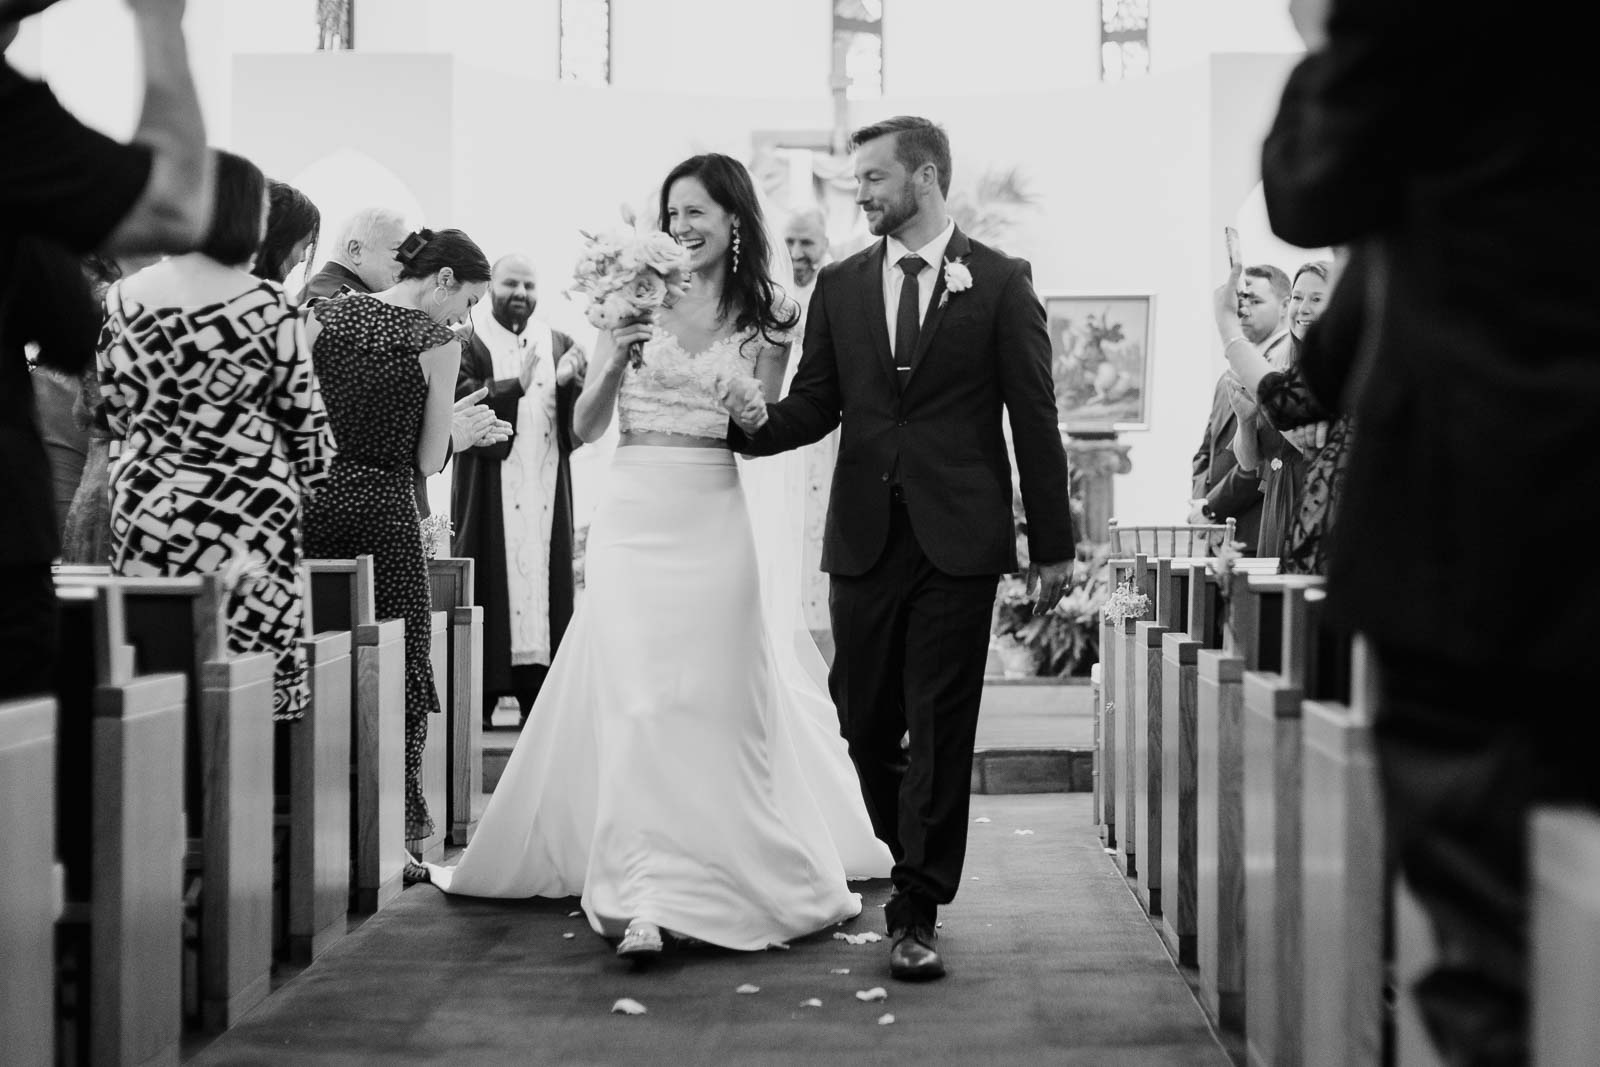 St-George-Maronite-Catholic-Church-Wedding couple just married